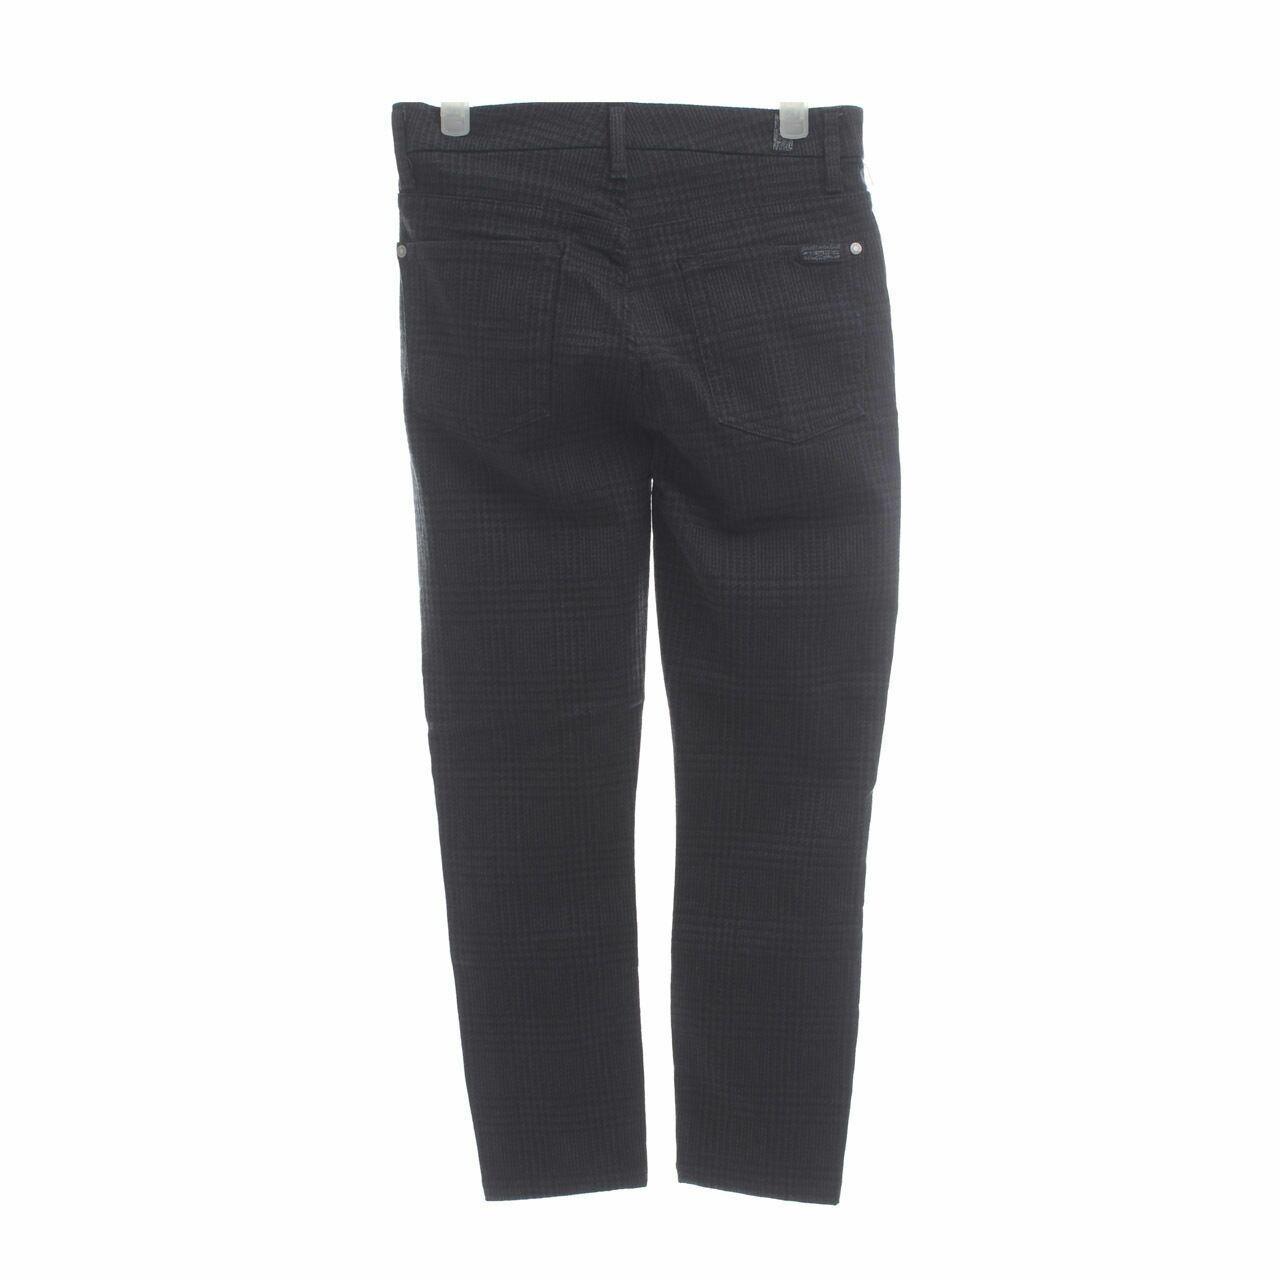 7 For All Mankind Black/Dark Grey Patterned Long Pants